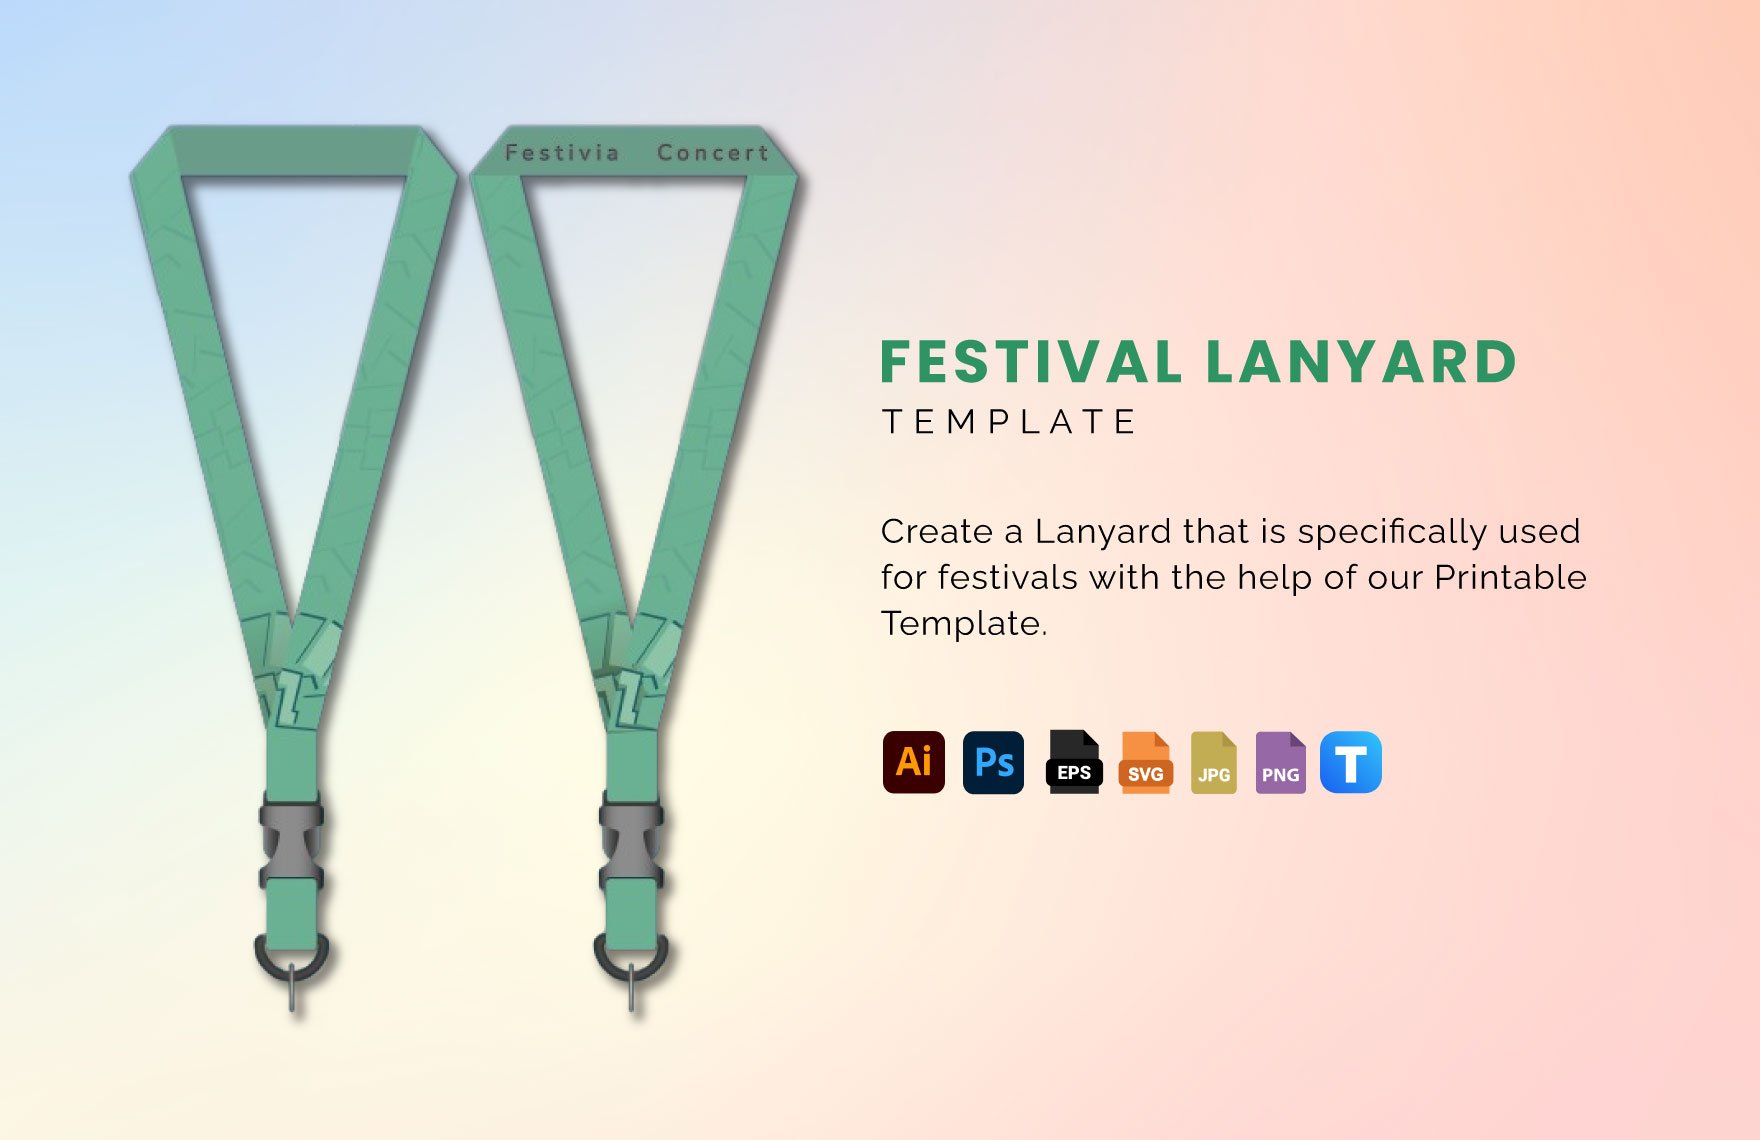 Festival Lanyard Template